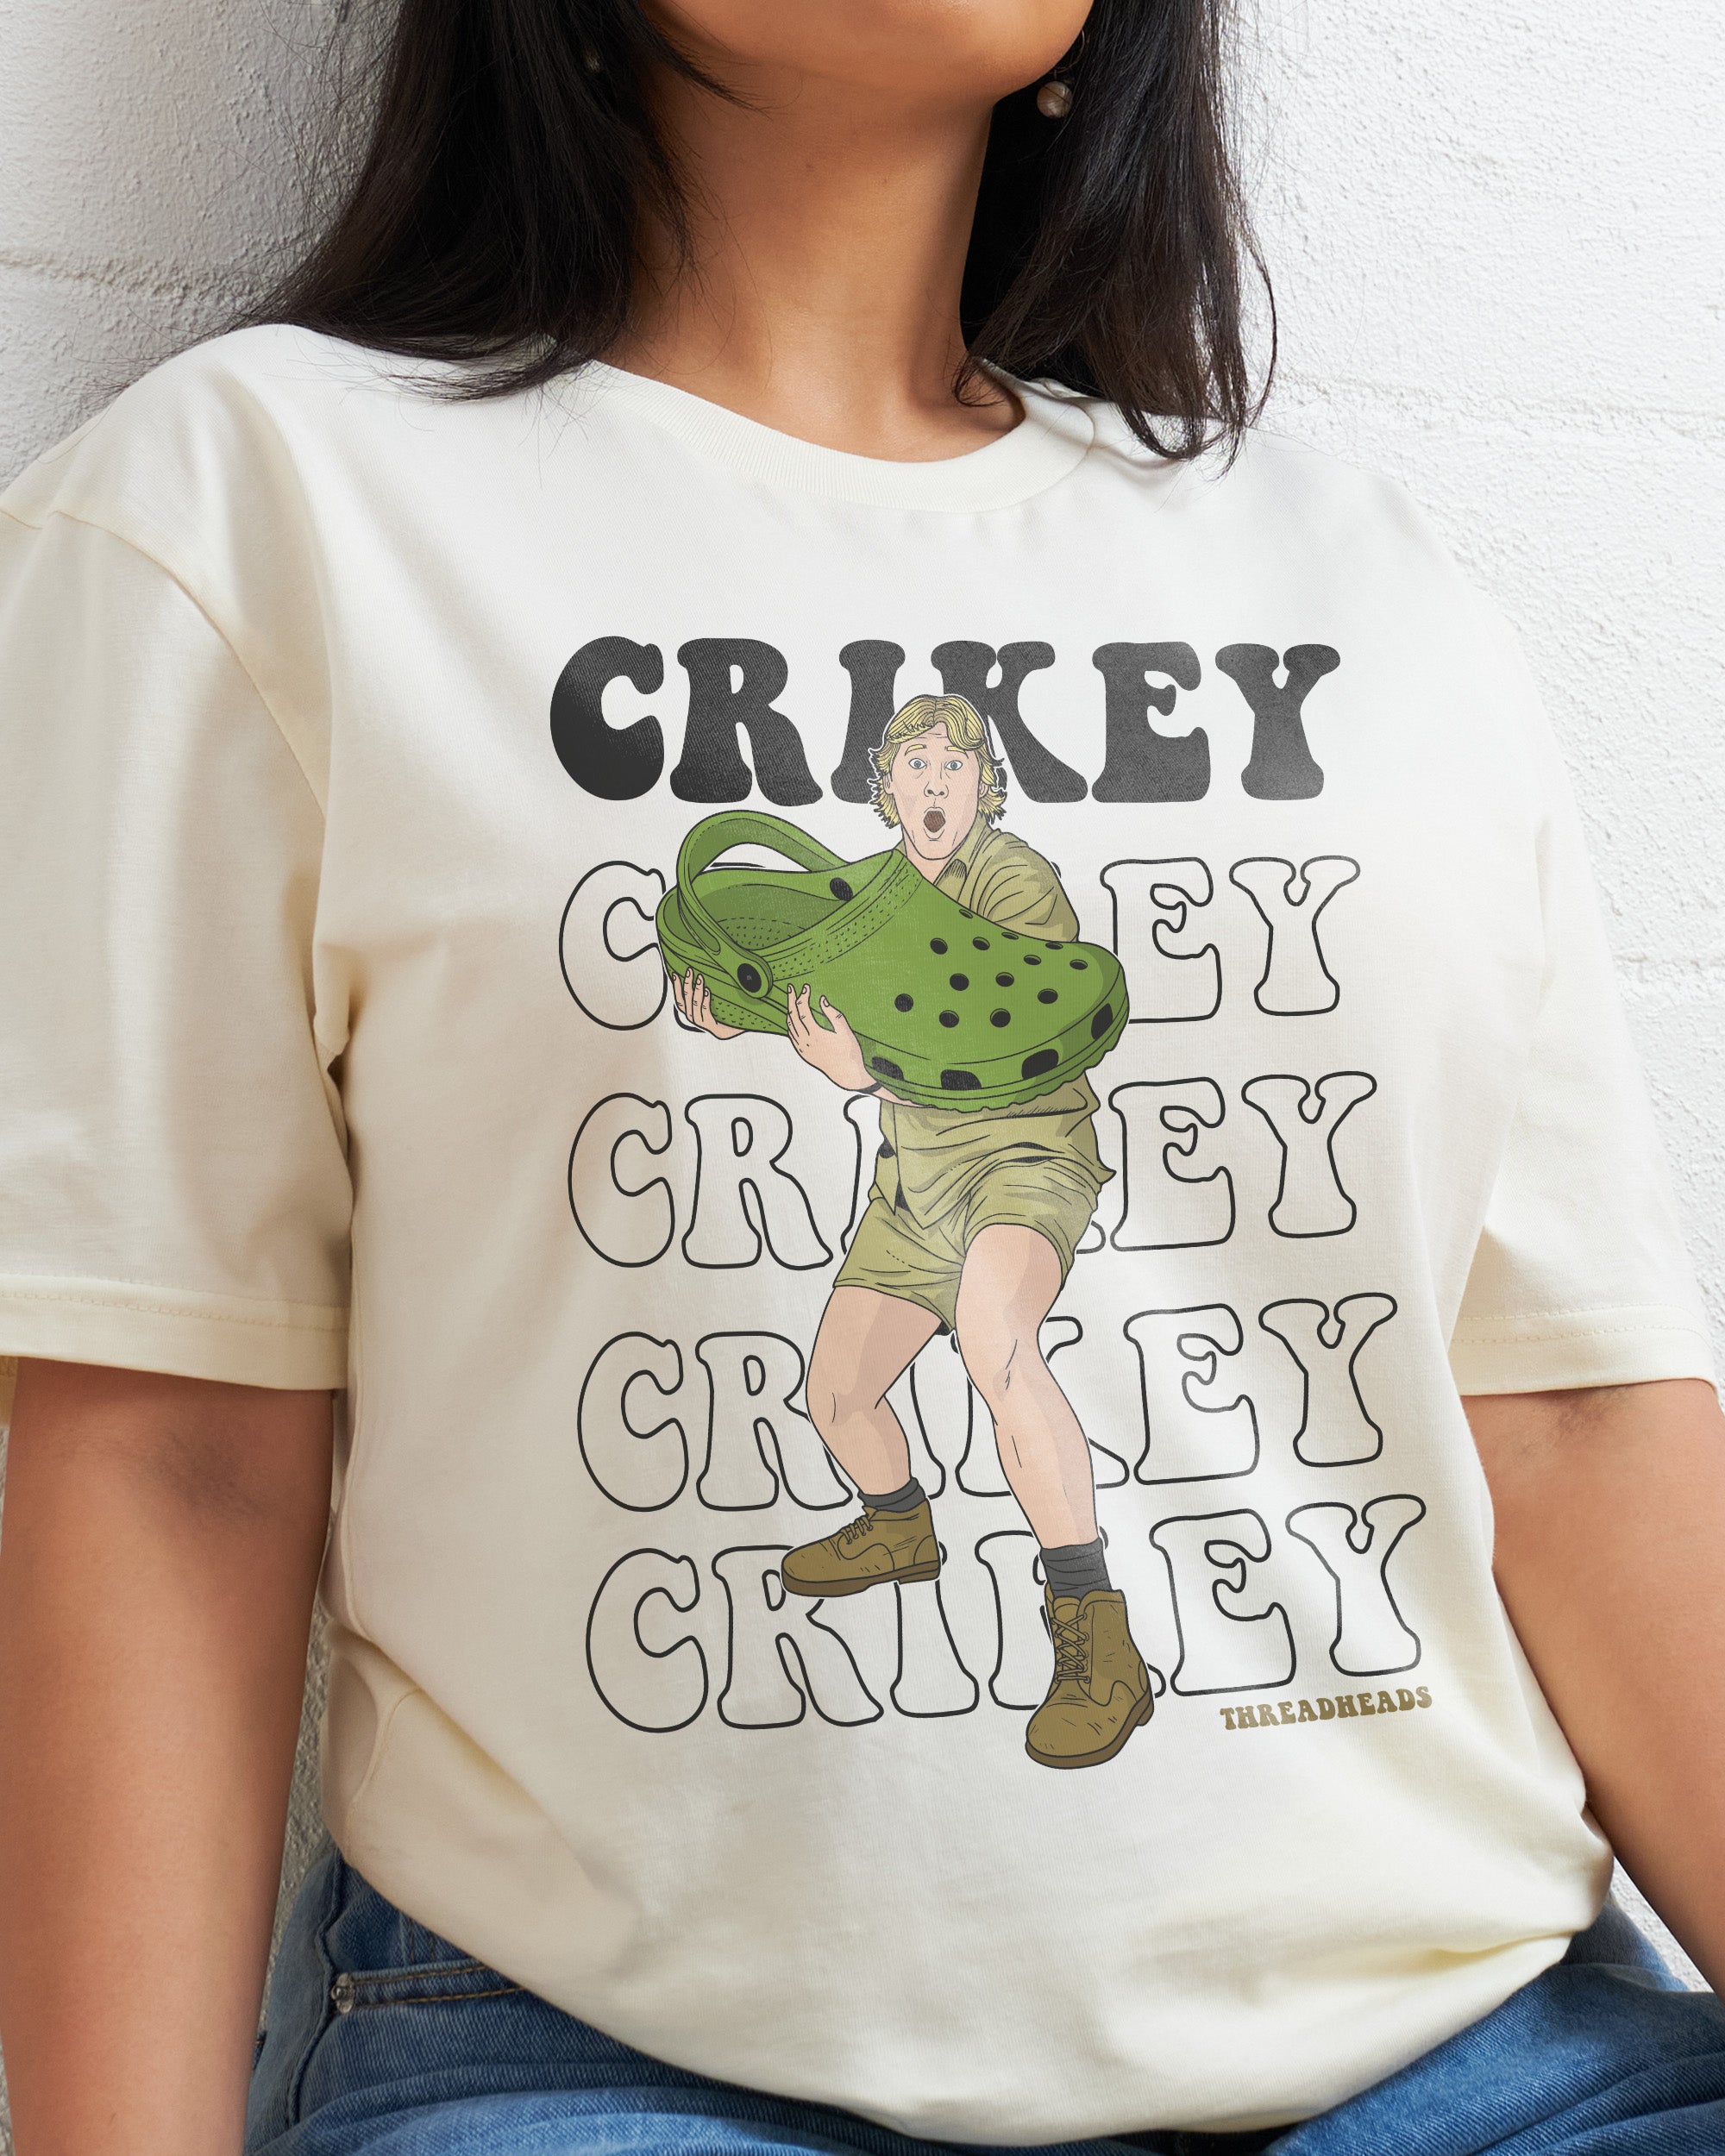 Crikey T-Shirt